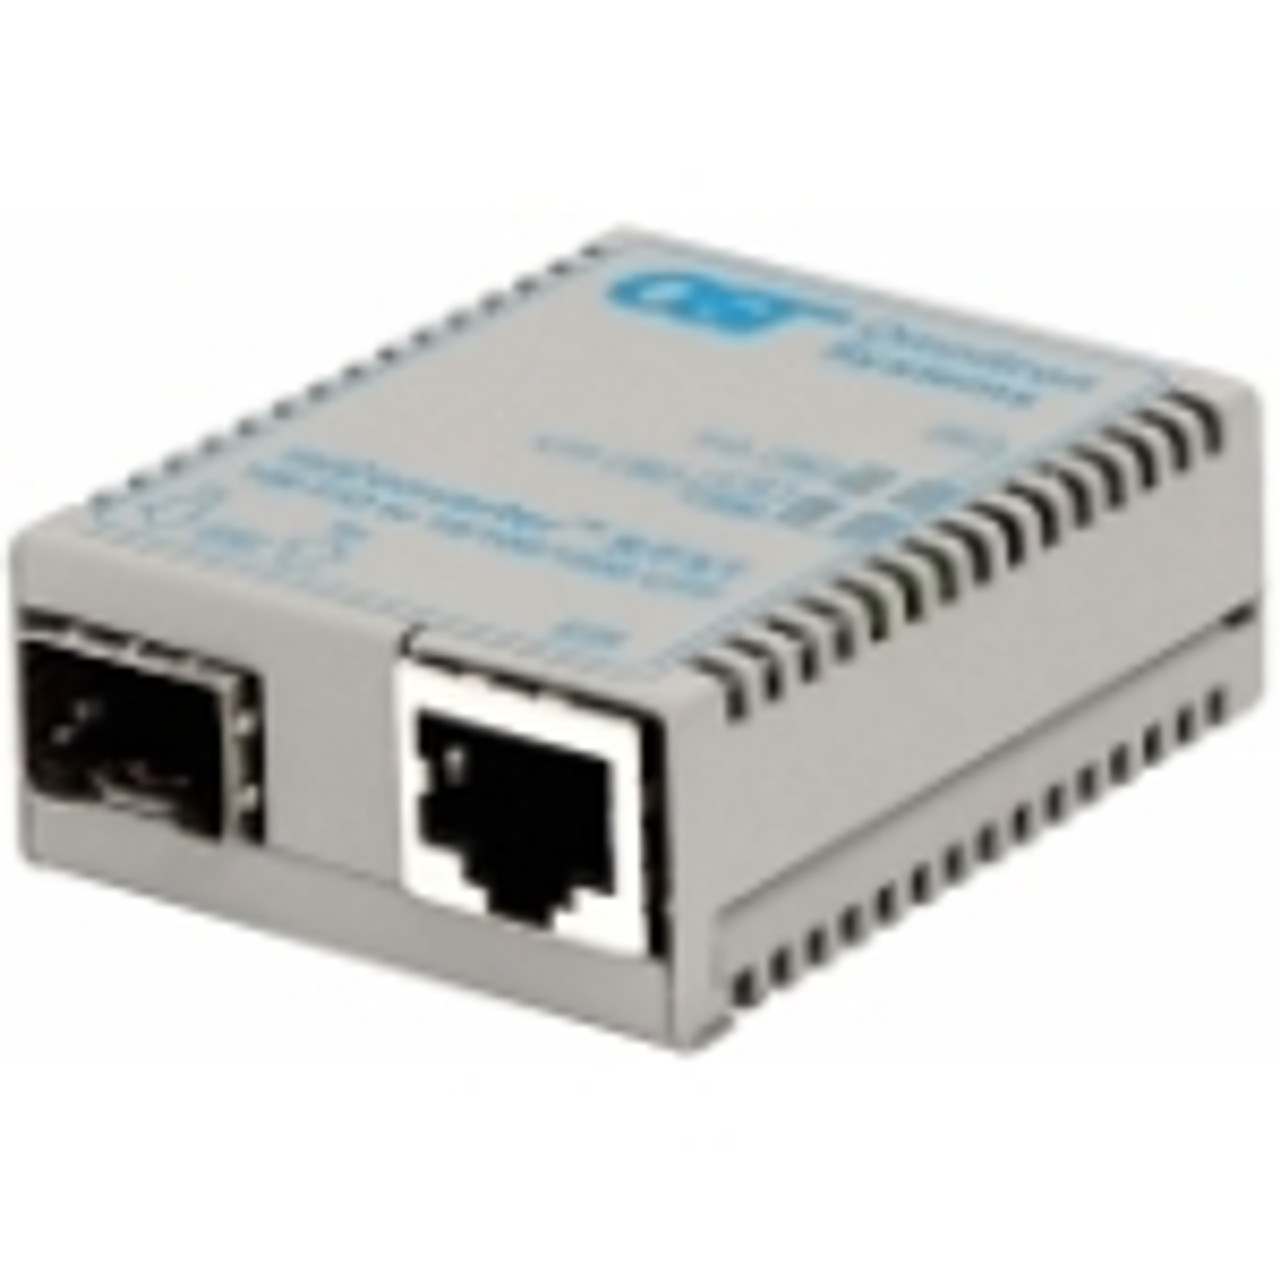 1619-0-6 miConverter/S 10/100 Ethernet Fiber Media Converter RJ45 SFP 1 x 10/100BASE-T, 1 x 100BASE-X (SFP), USB Powered,